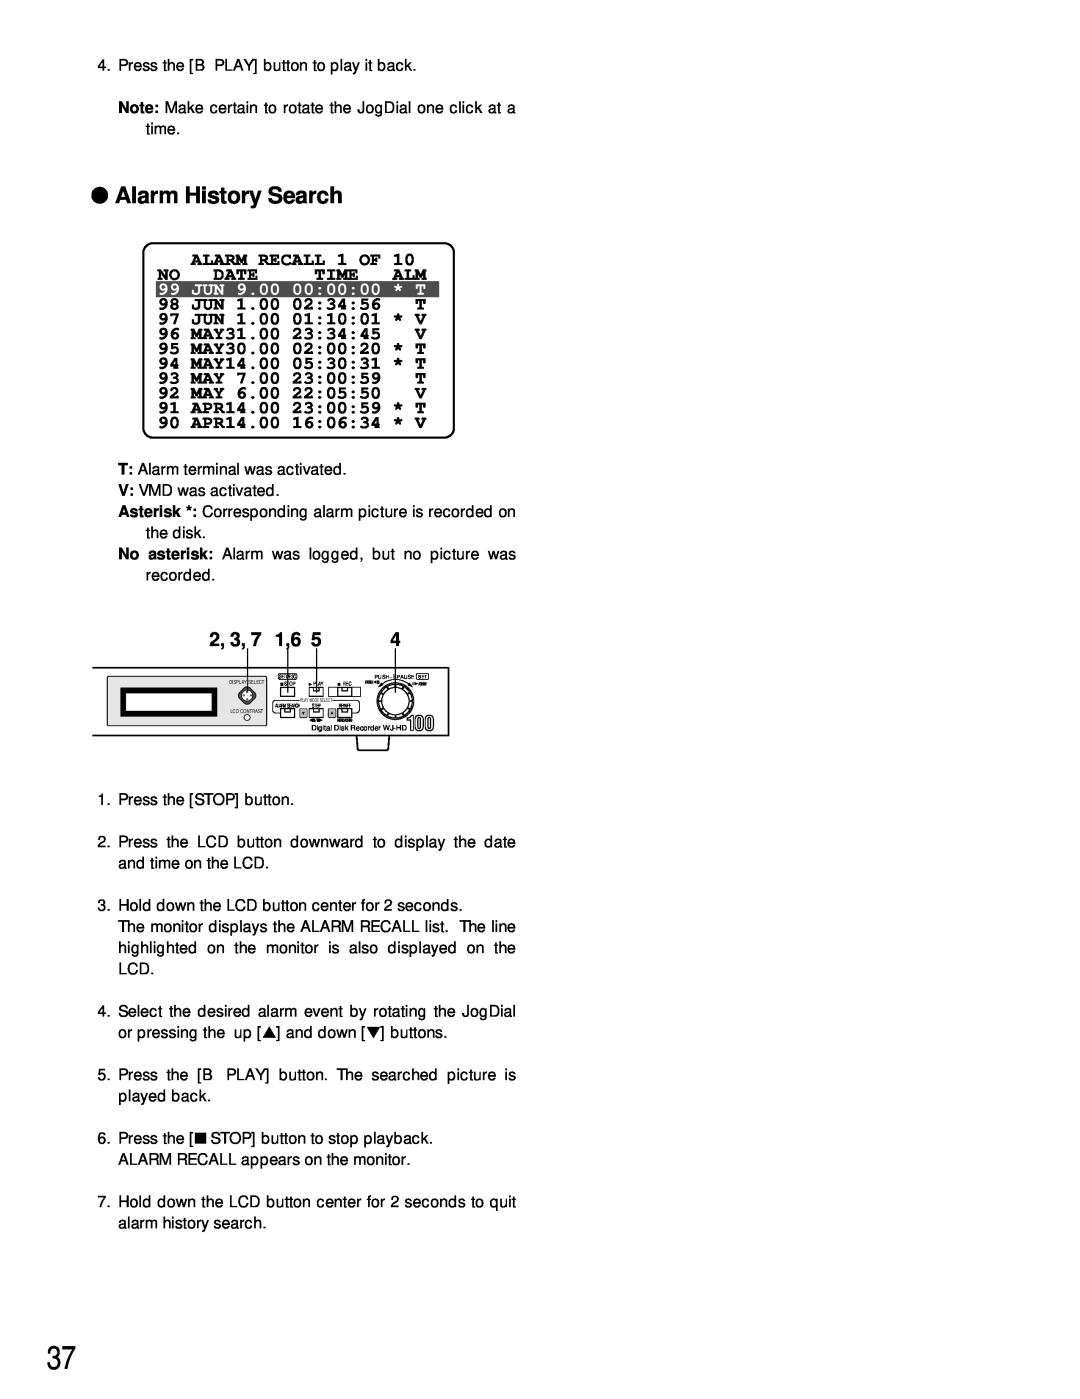 Panasonic WJ-HD100 operating instructions Alarm History Search, JUN 9.00 00 